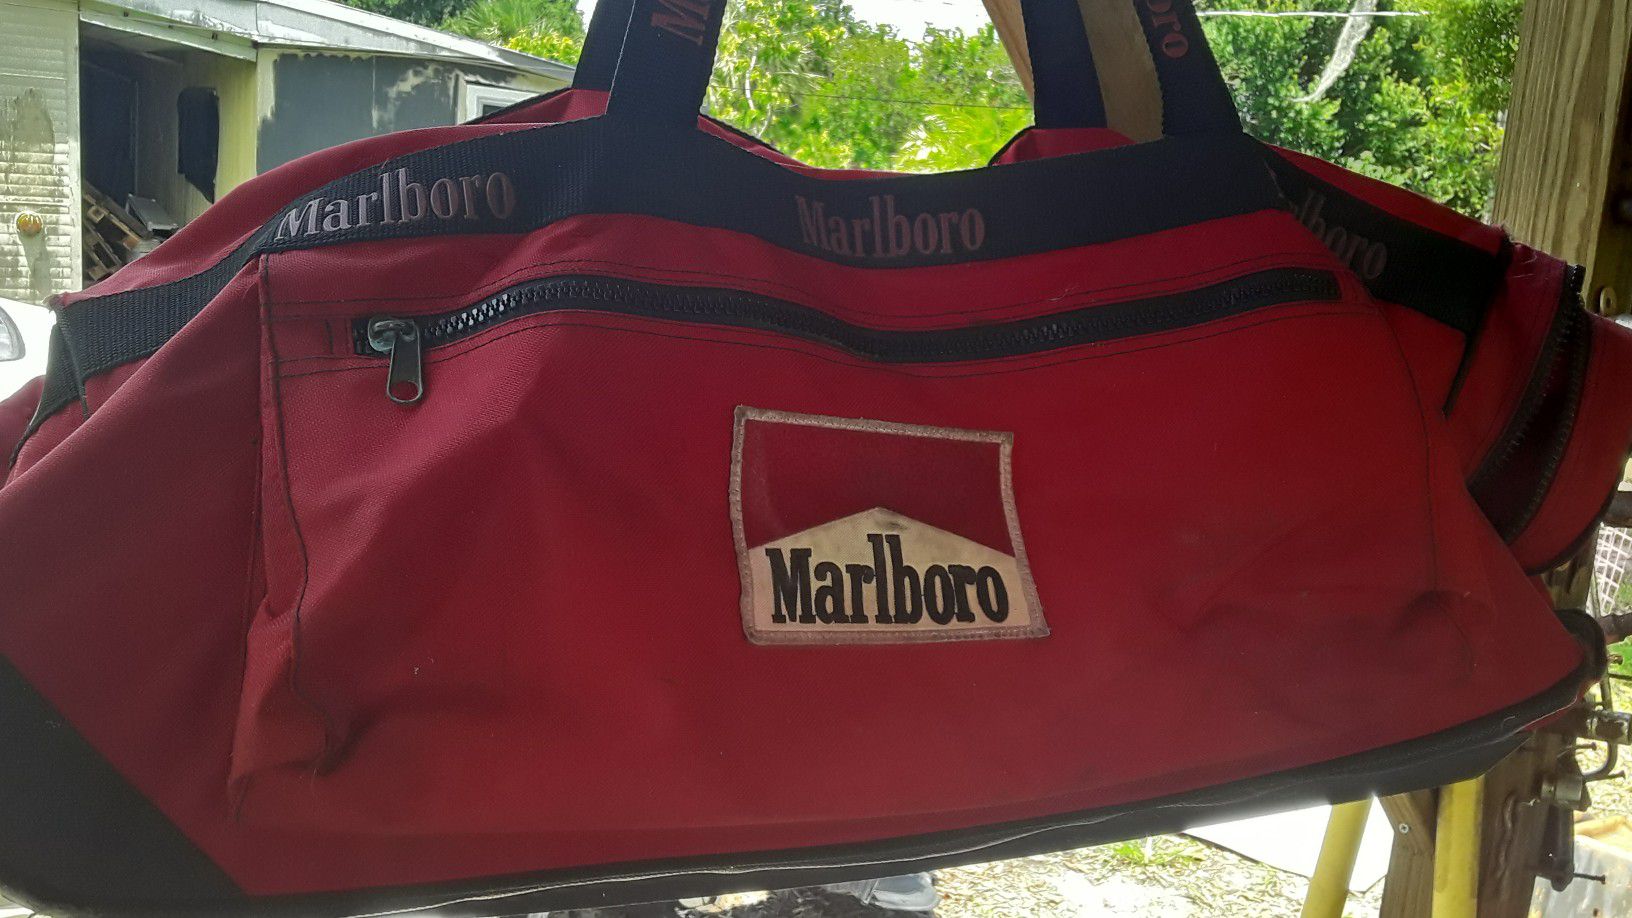 Marlboro Duffle Bag